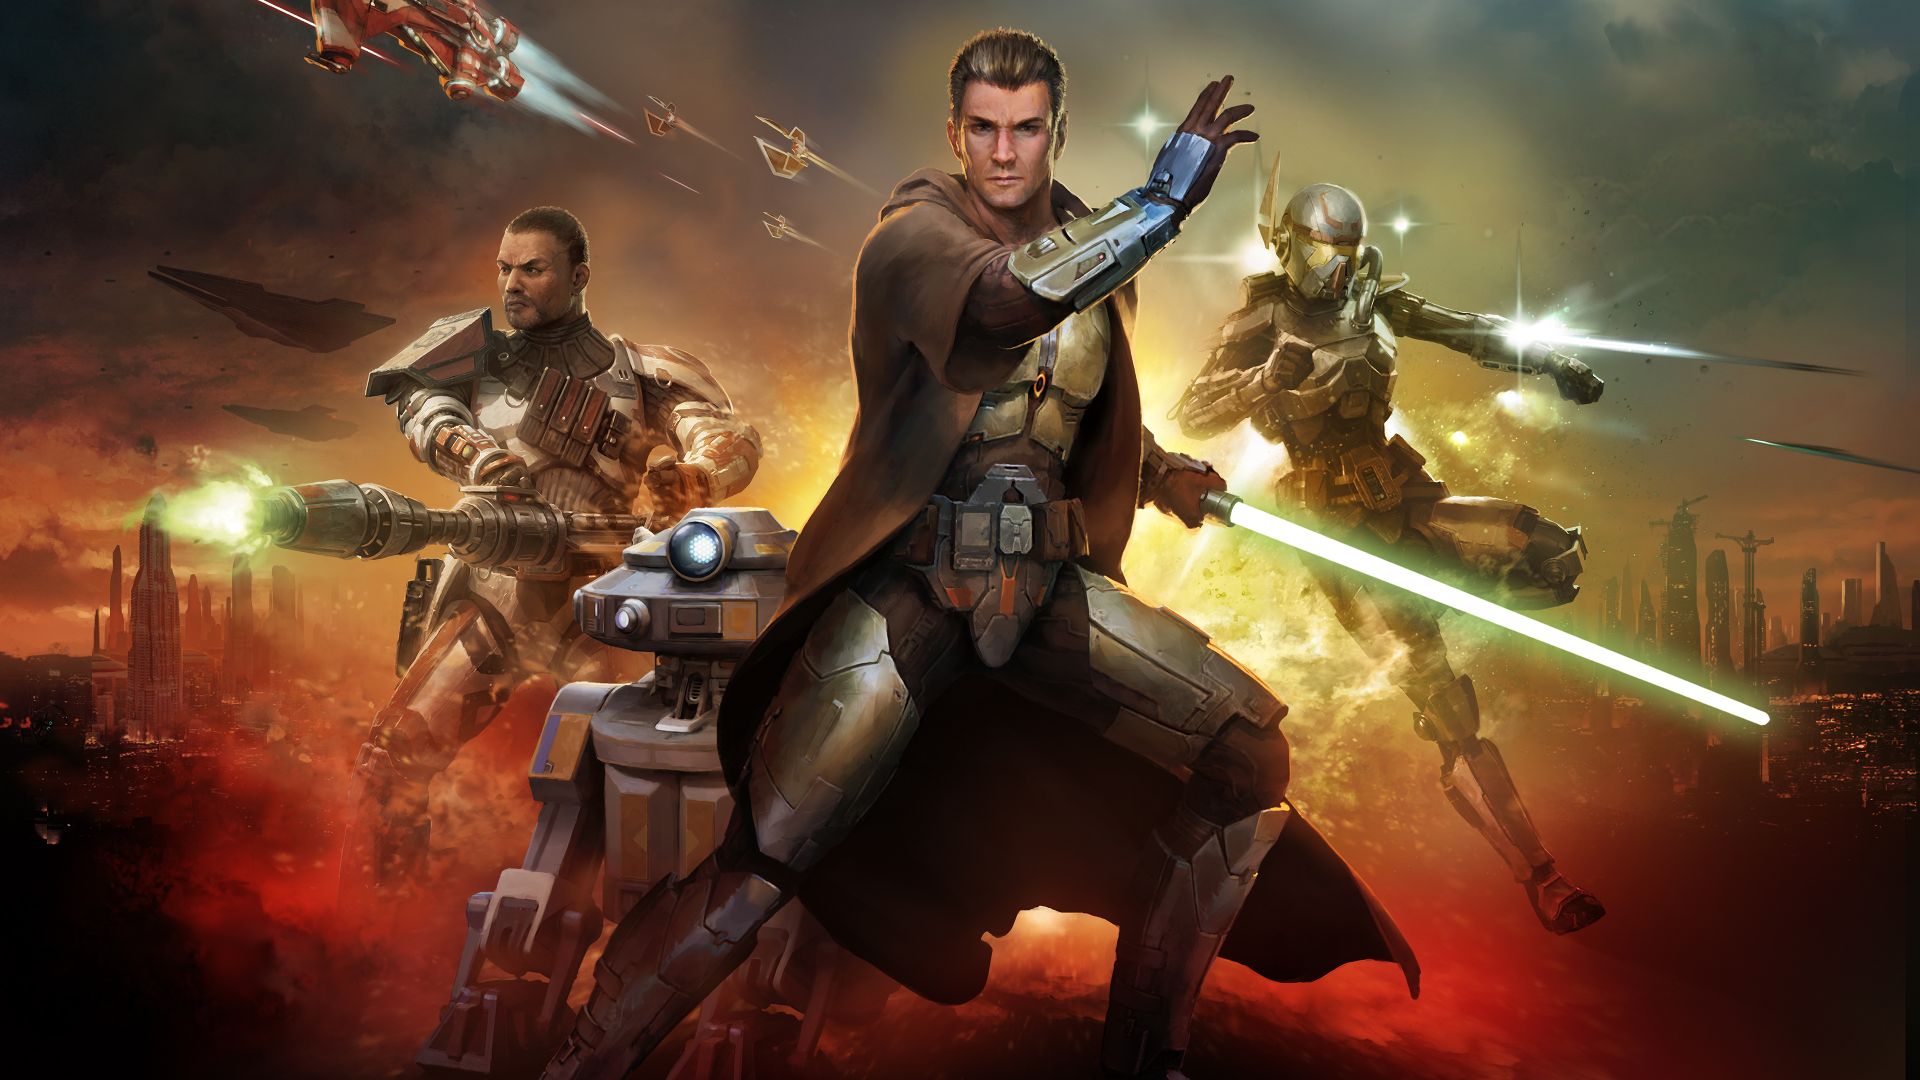 BioWare confirms developer change for Star Wars: The Old Republic